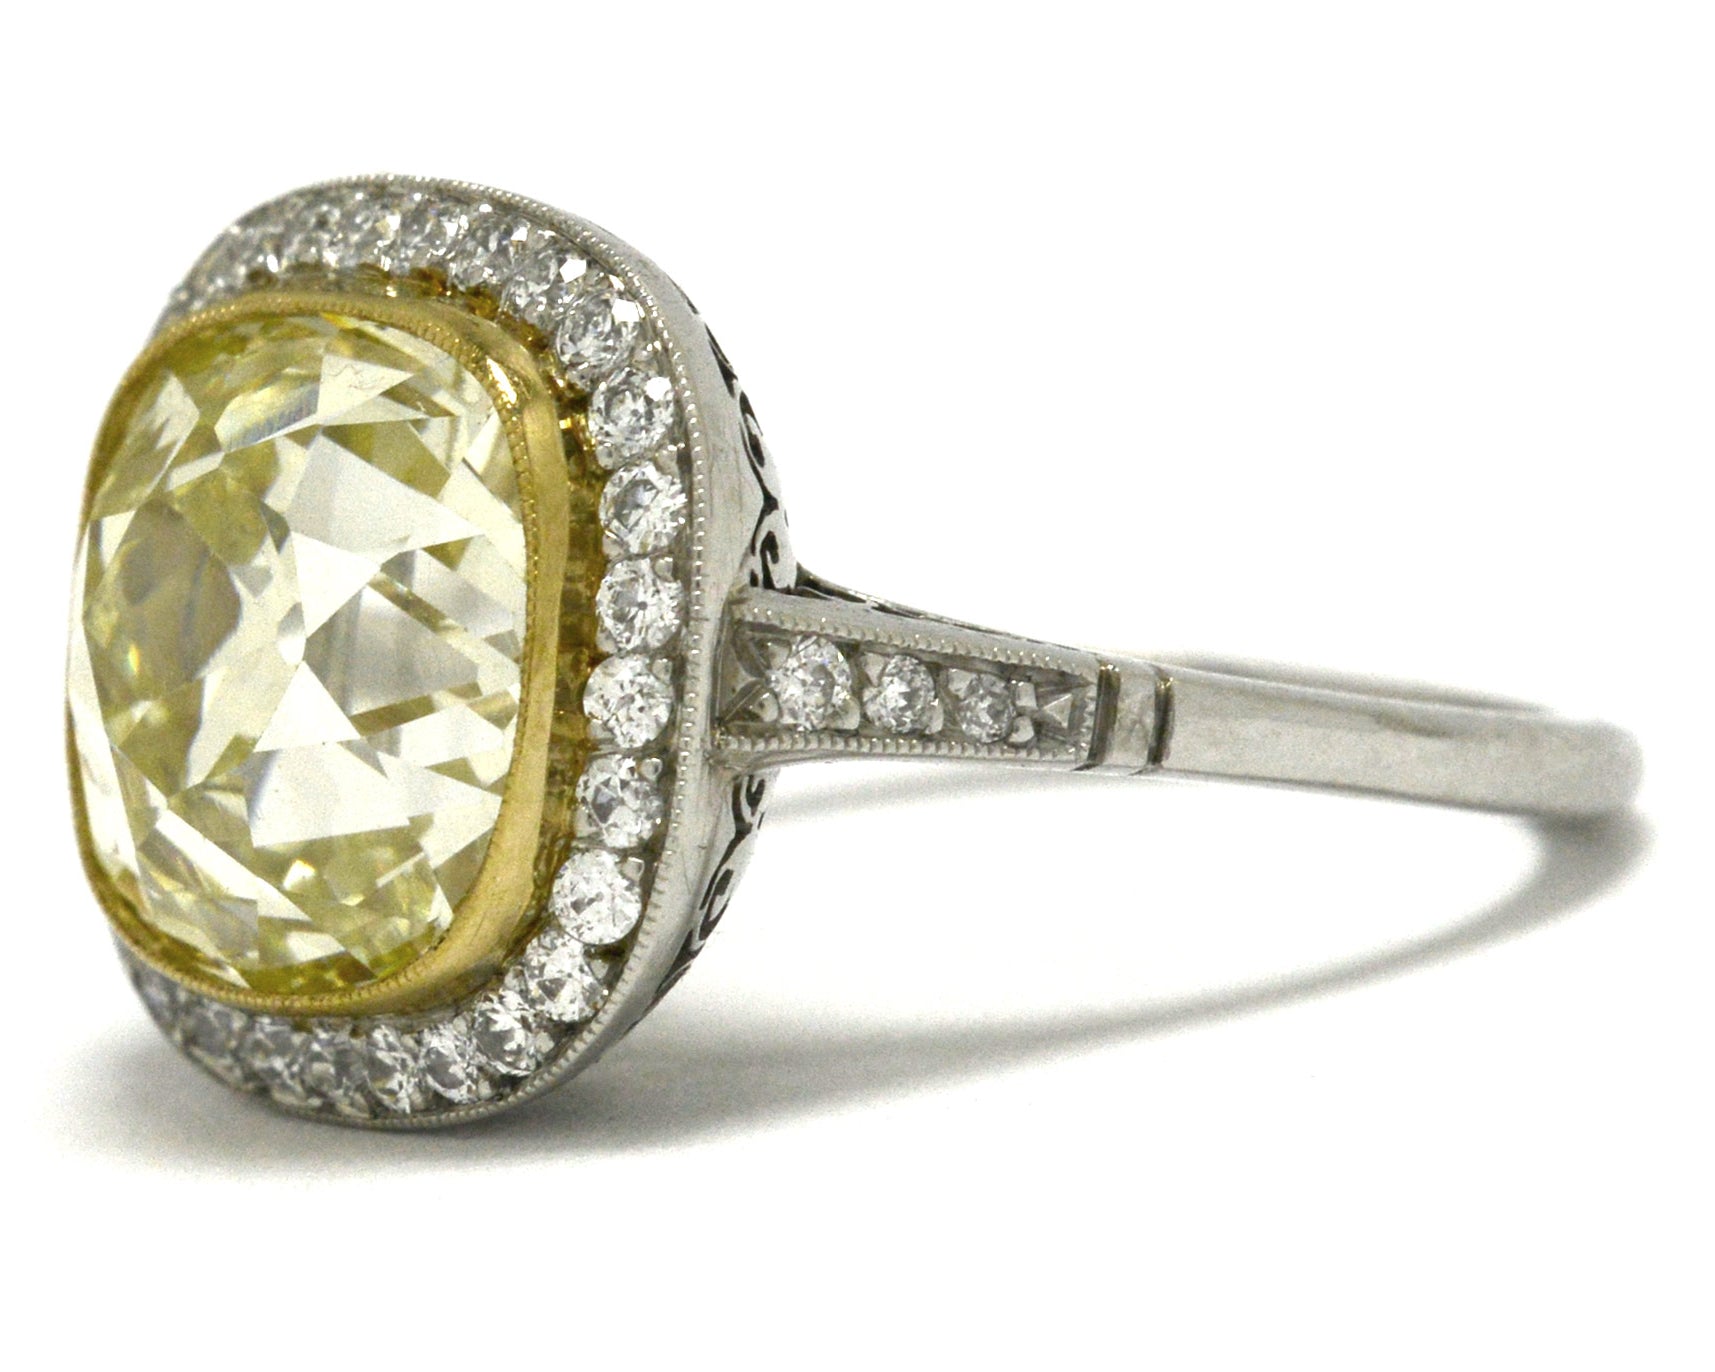 Light yellow 5 carat cushion diamond platinum engagement ring.